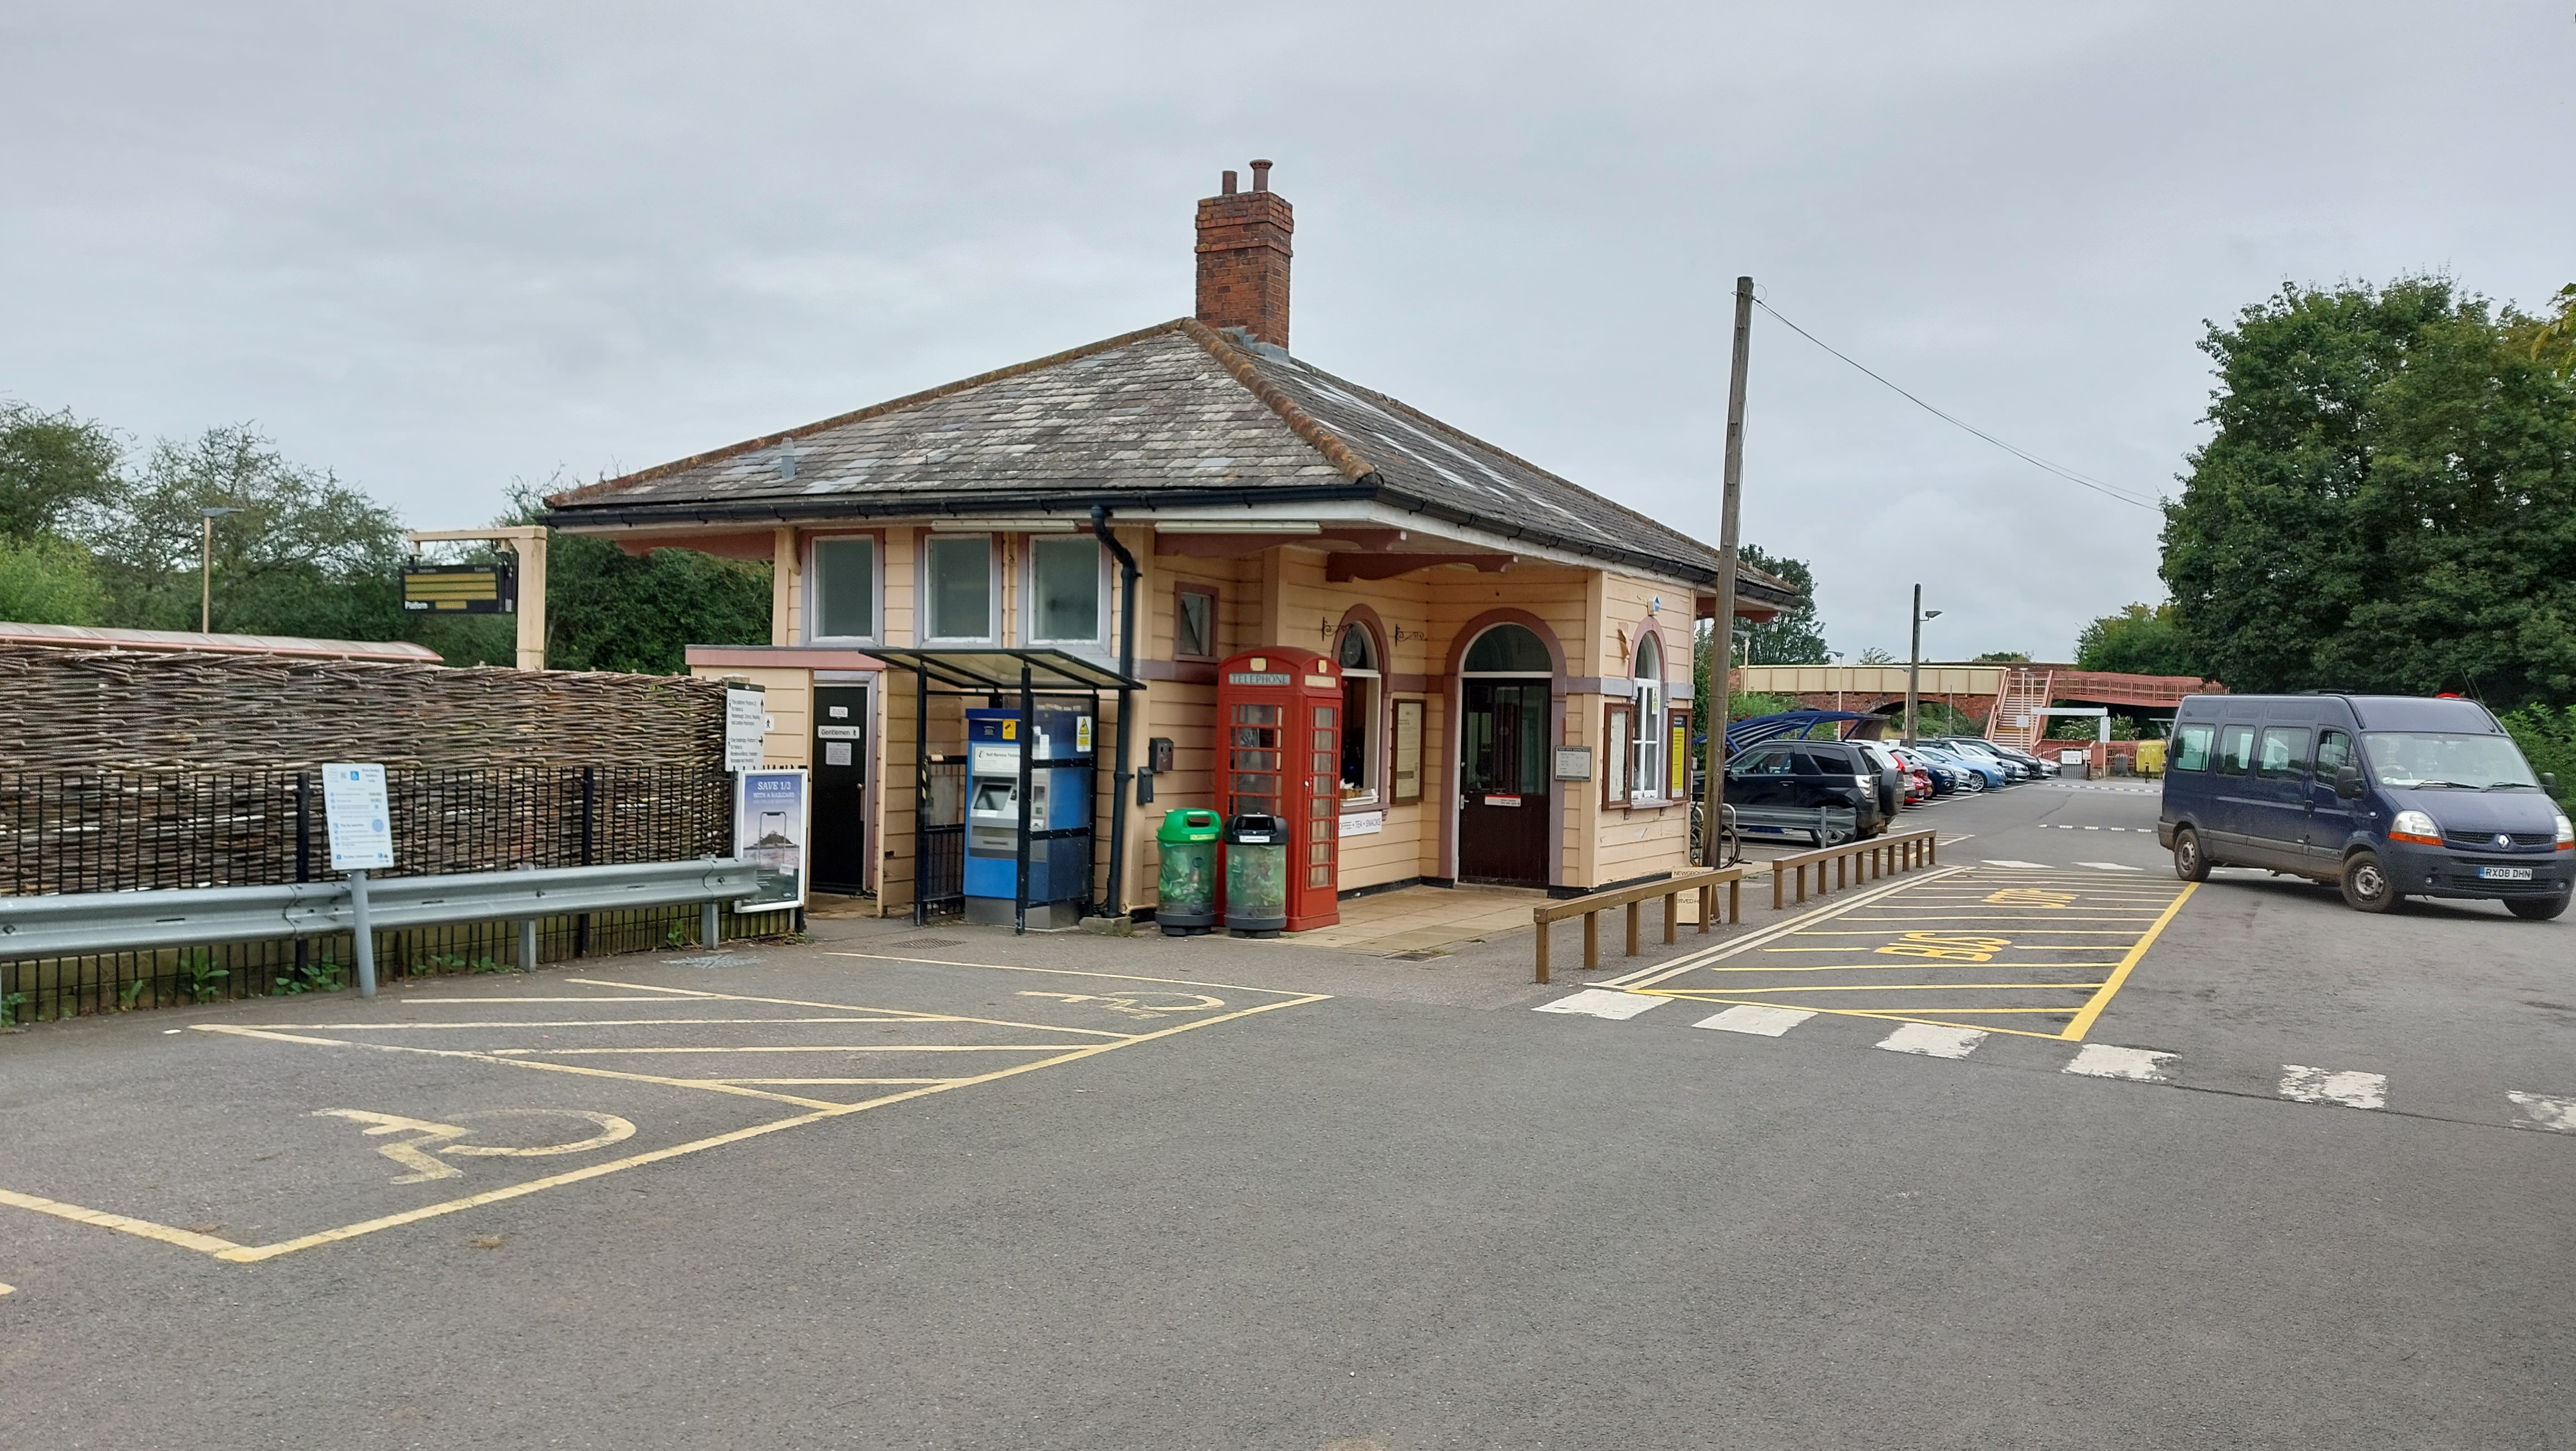 Charlbury station